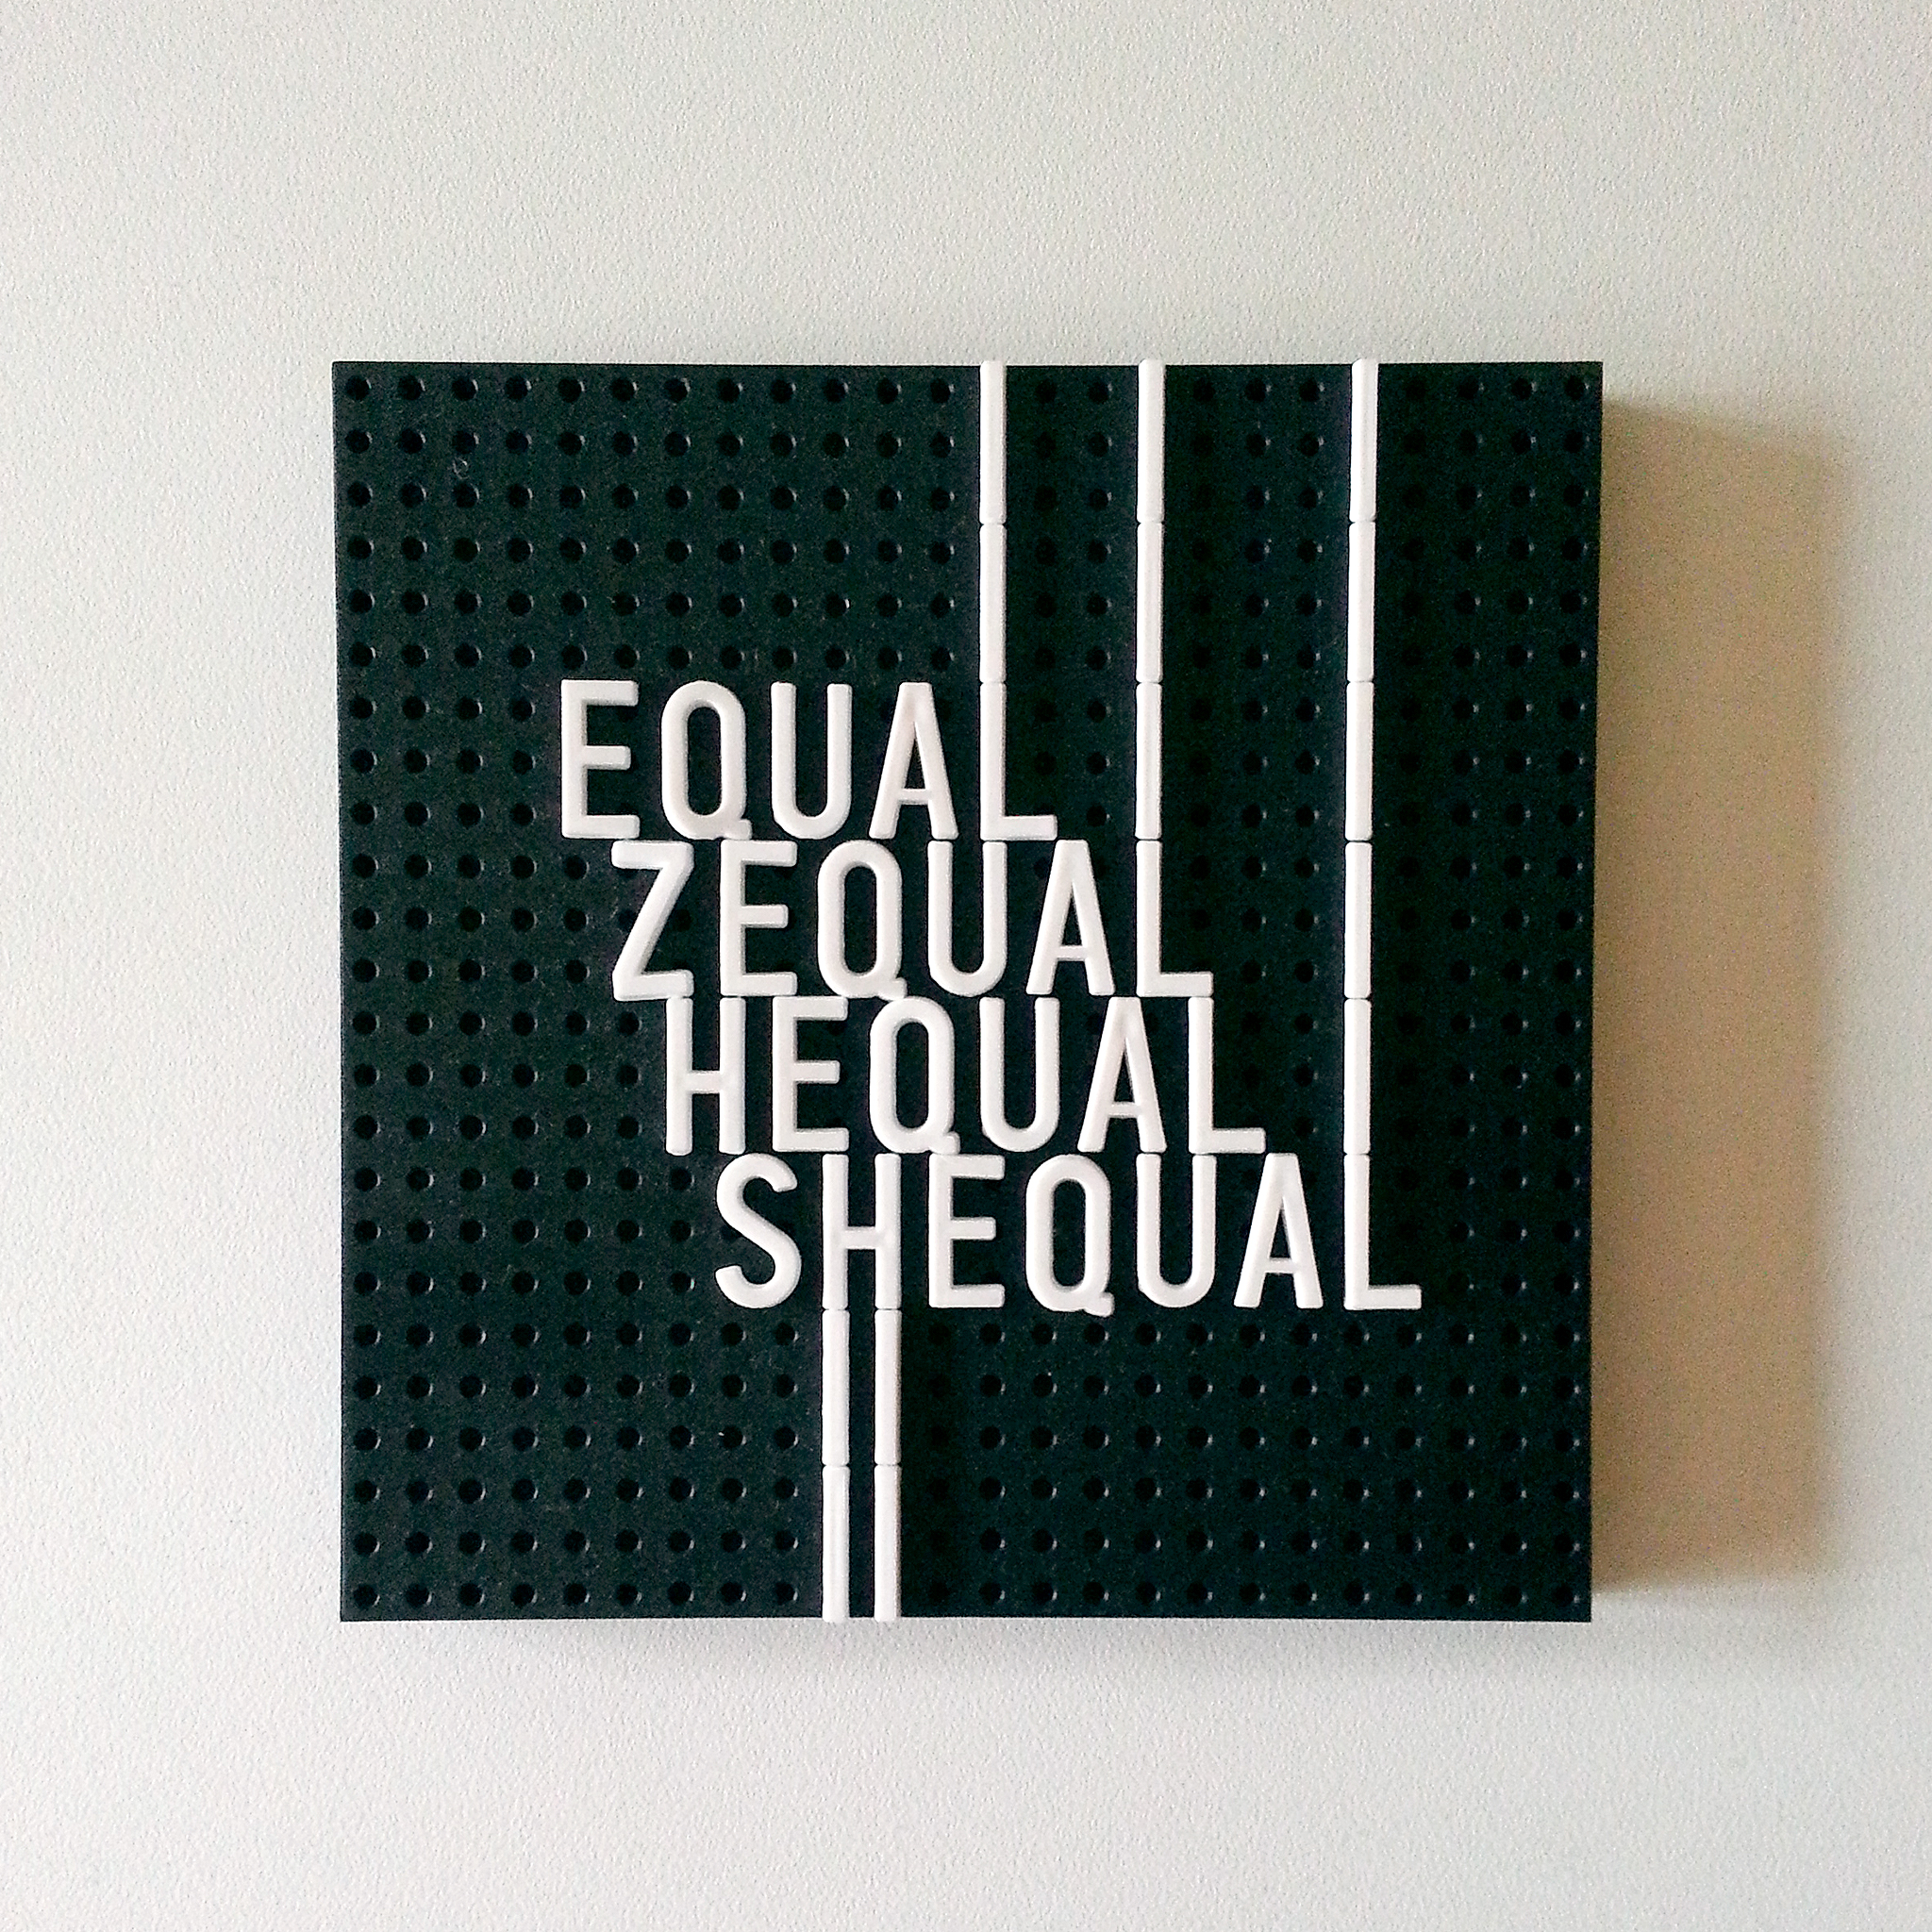 Equal Zequal Hequal Shequal